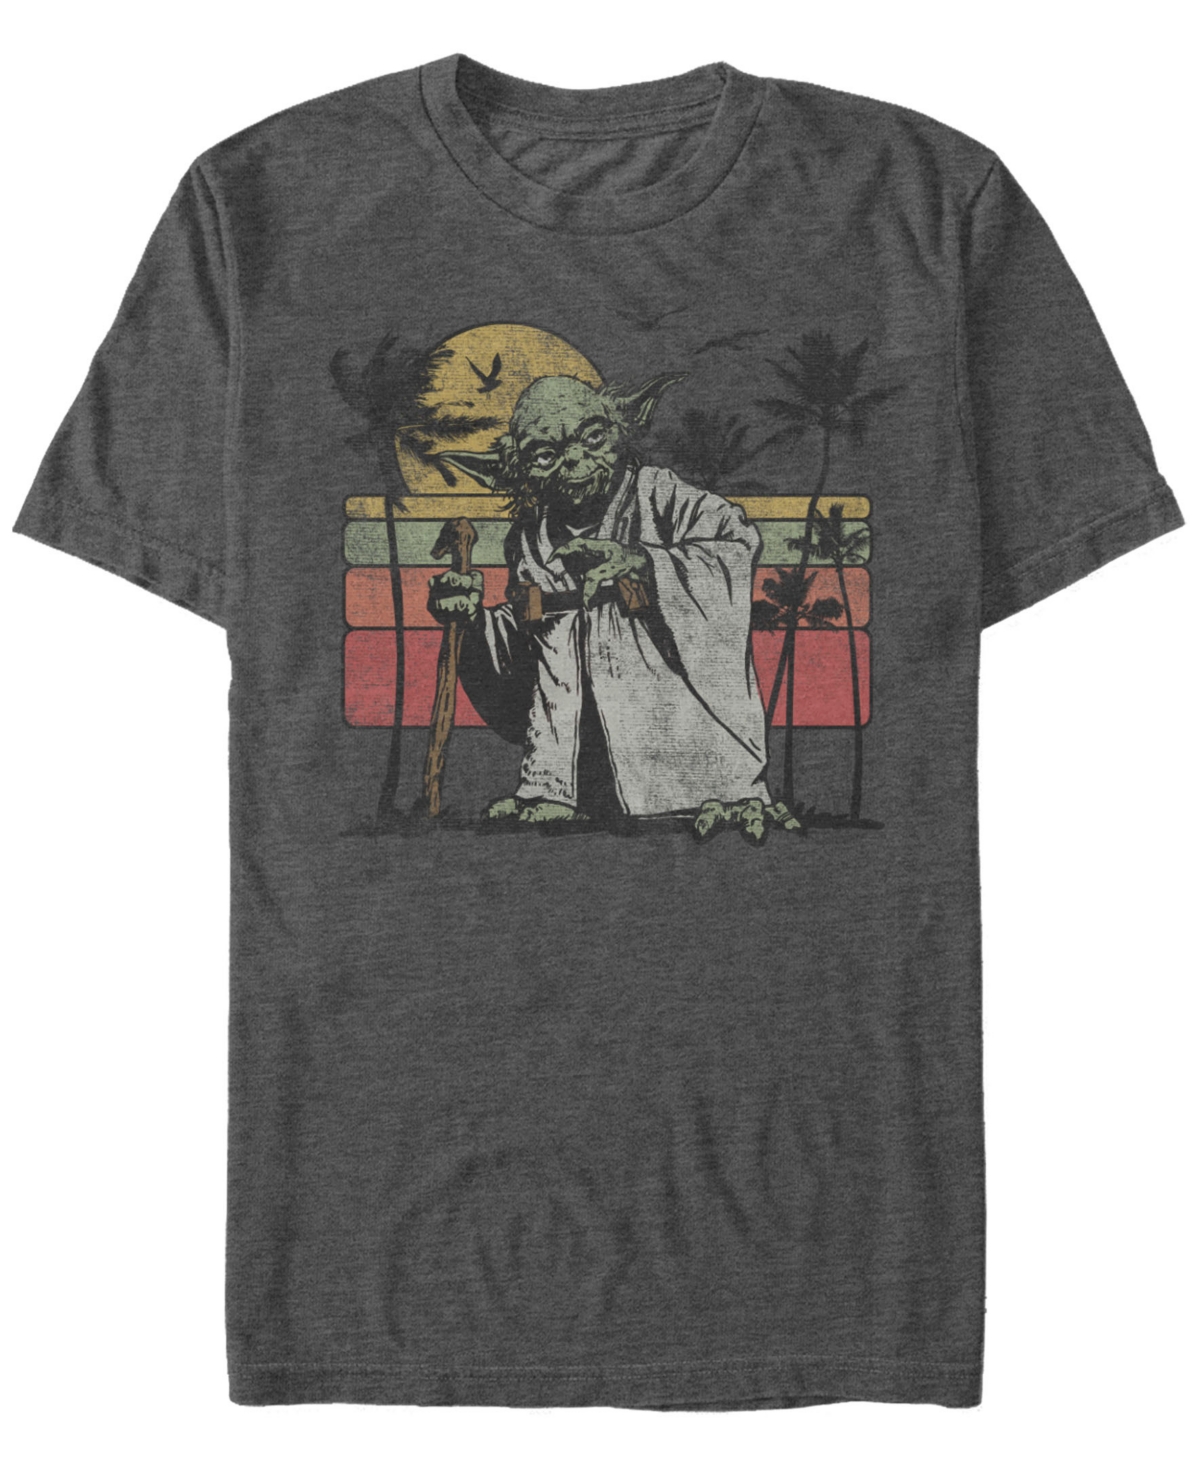 Star Wars Men's Classic Yoda Island Short Sleeve T-Shirt - Charcoal Heather